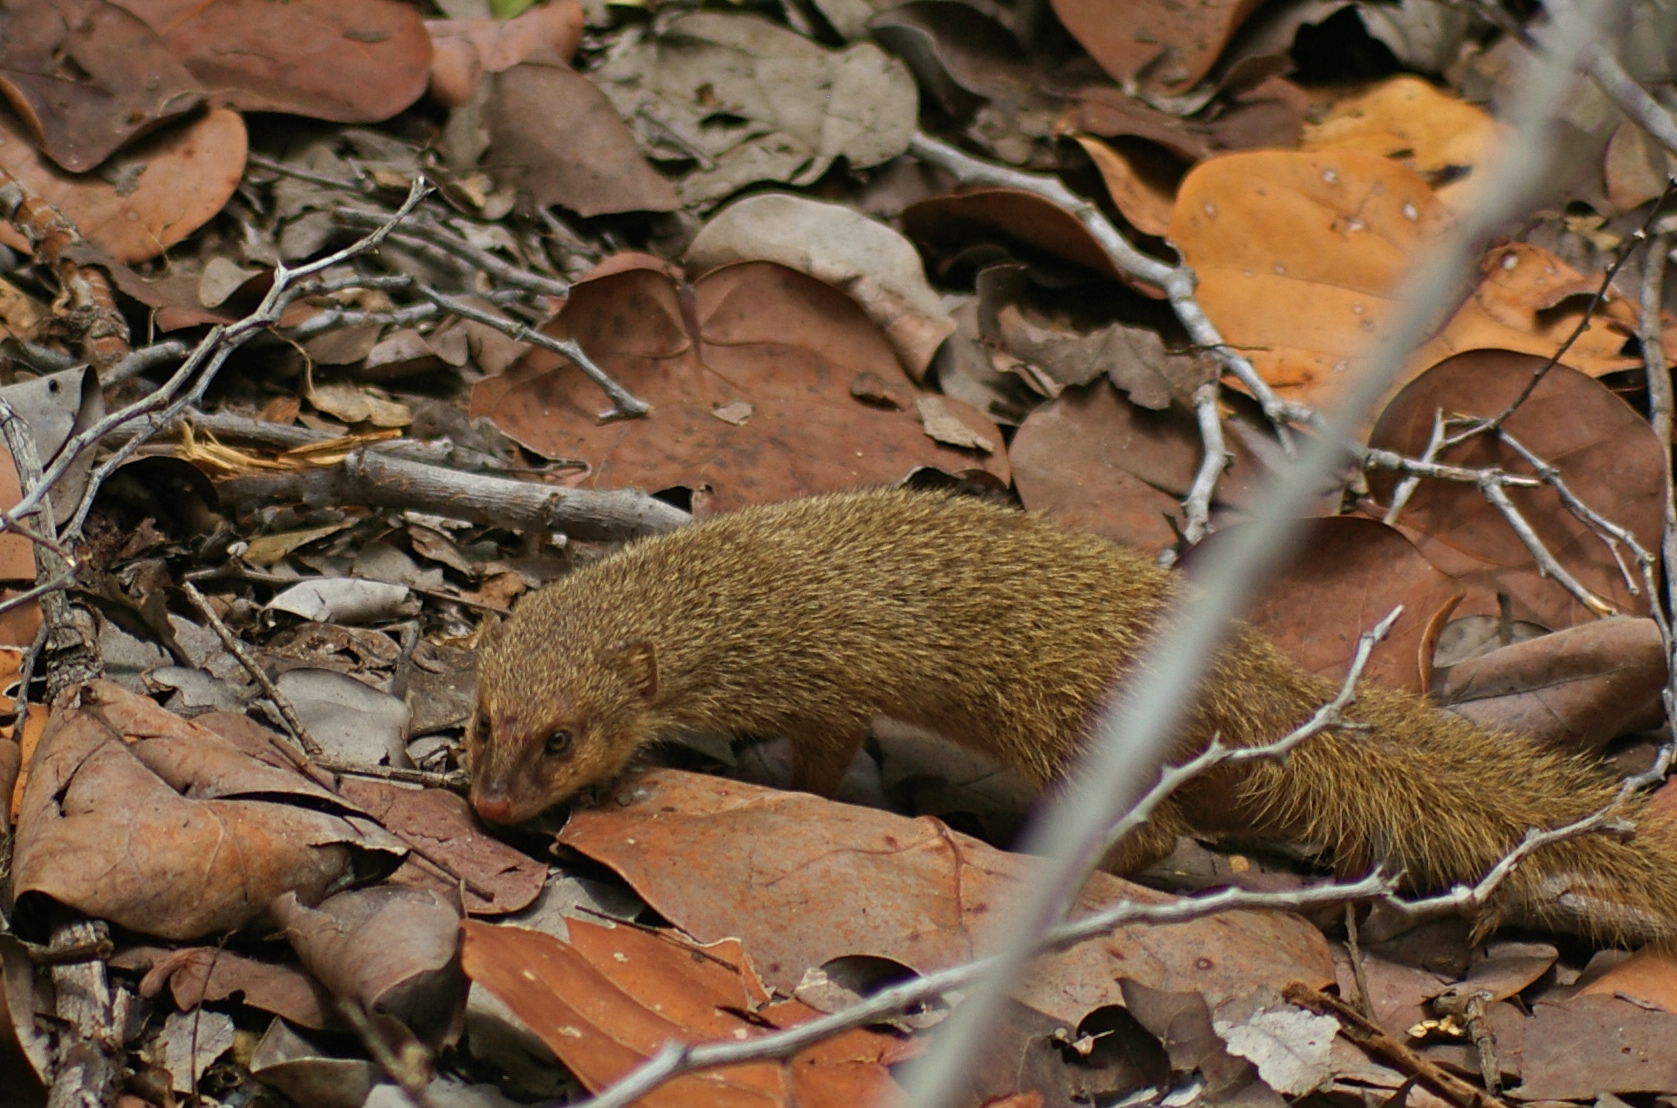 Juvenile mongoose at Sandy Point